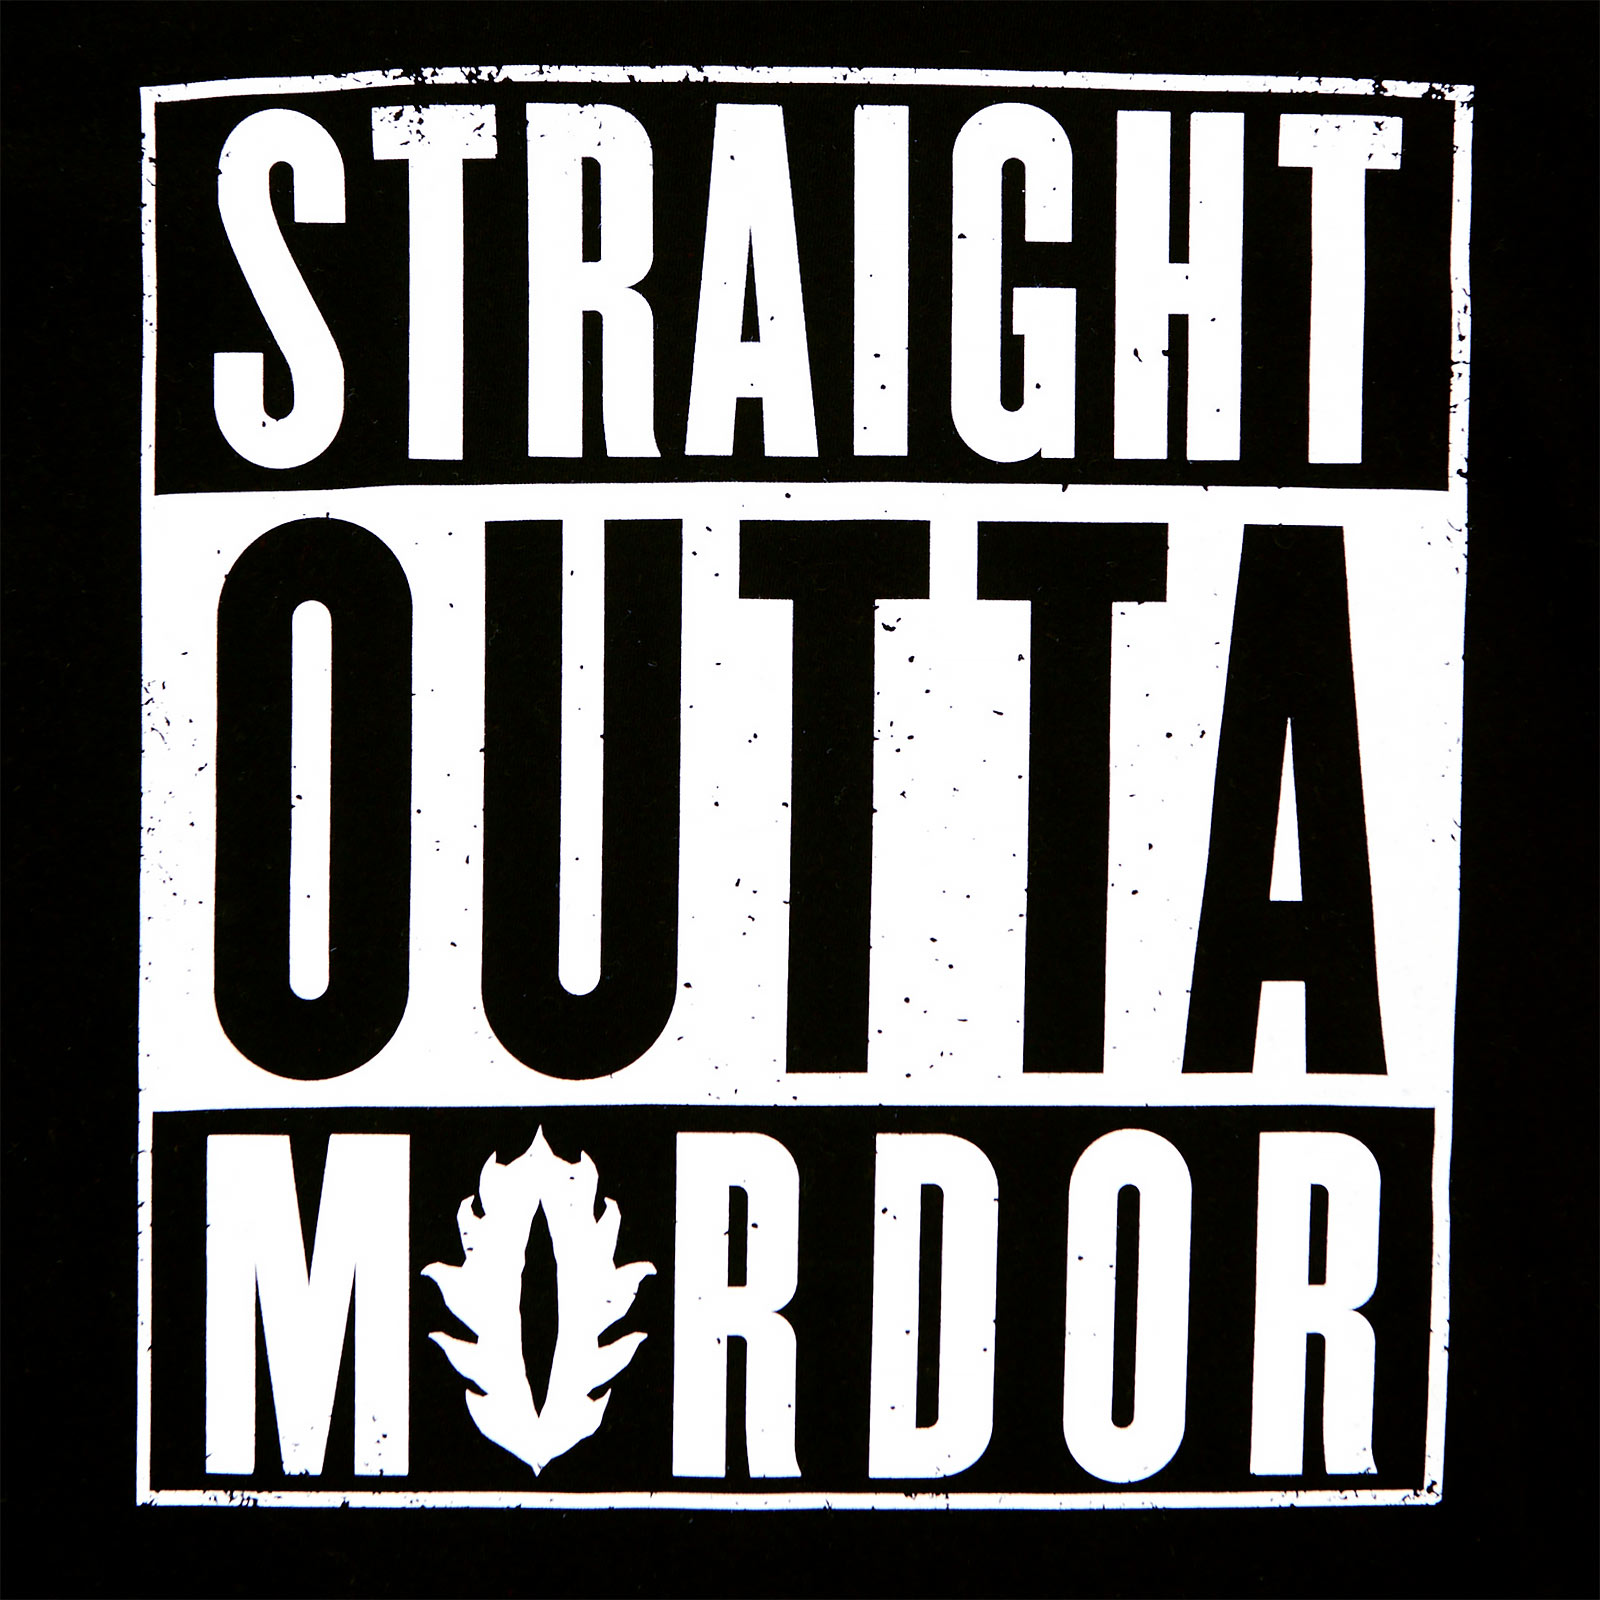 Straight Outta Mordor - Black T-Shirt